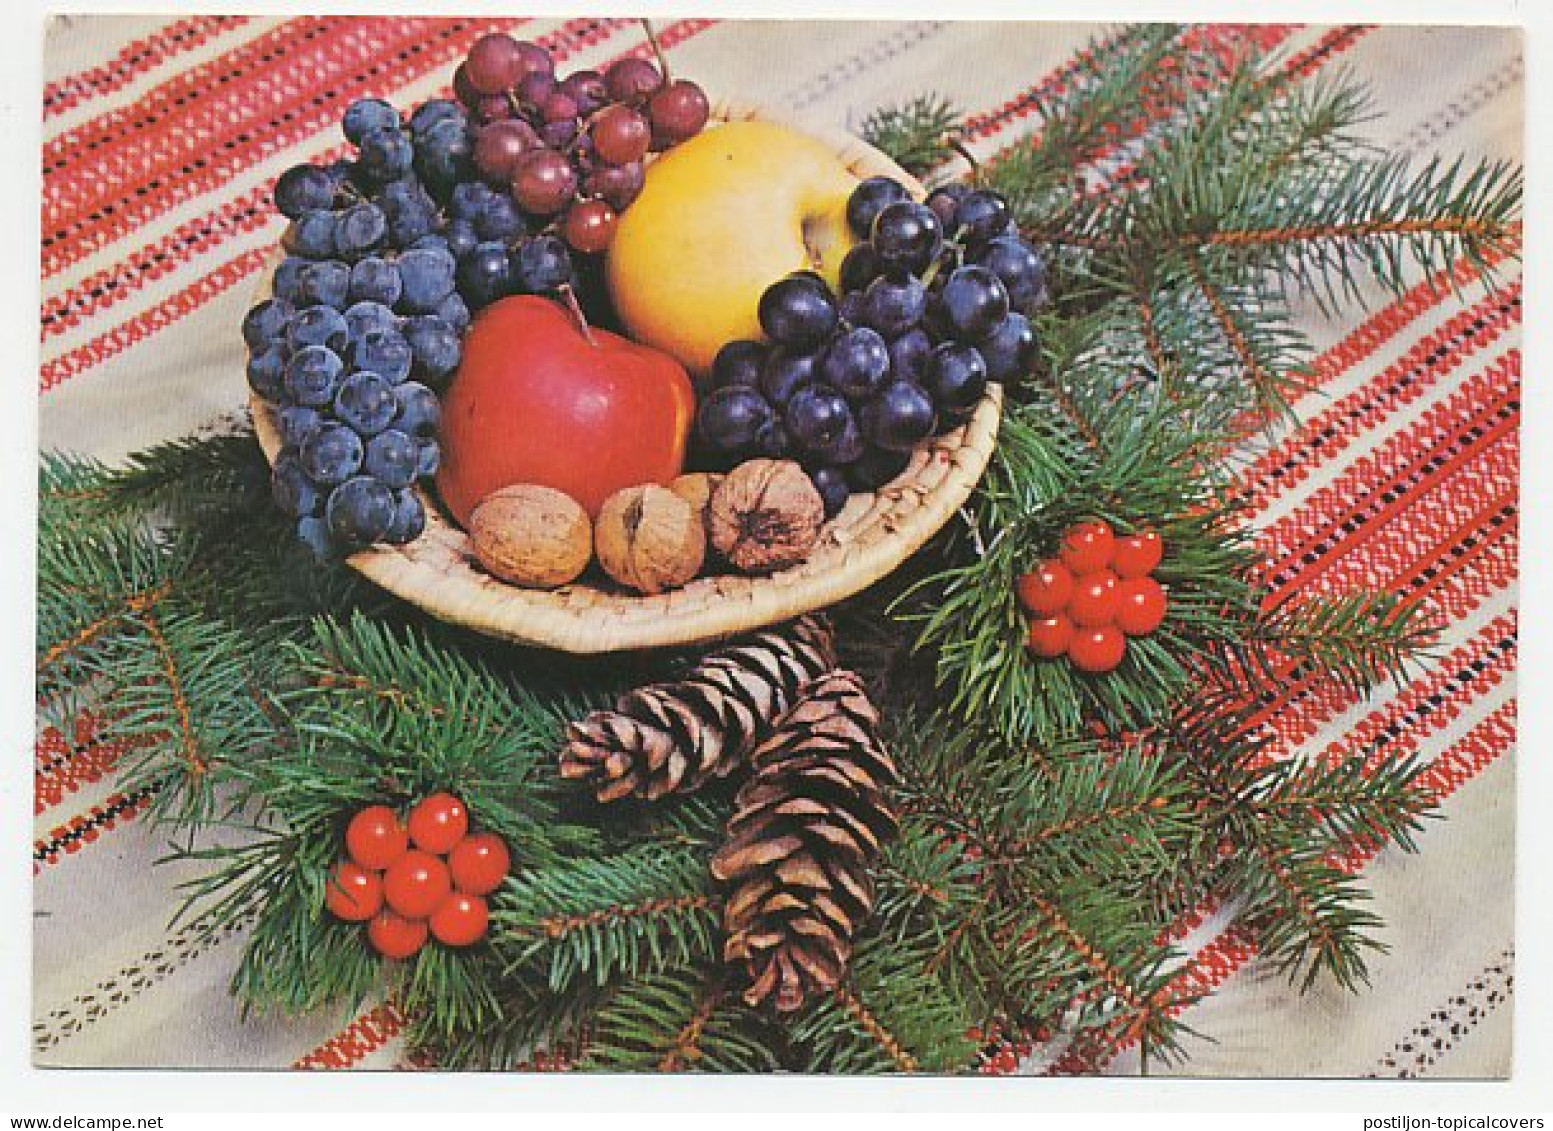 Postal Stationery Hungary Apple - Grape - Walnut - Fruits